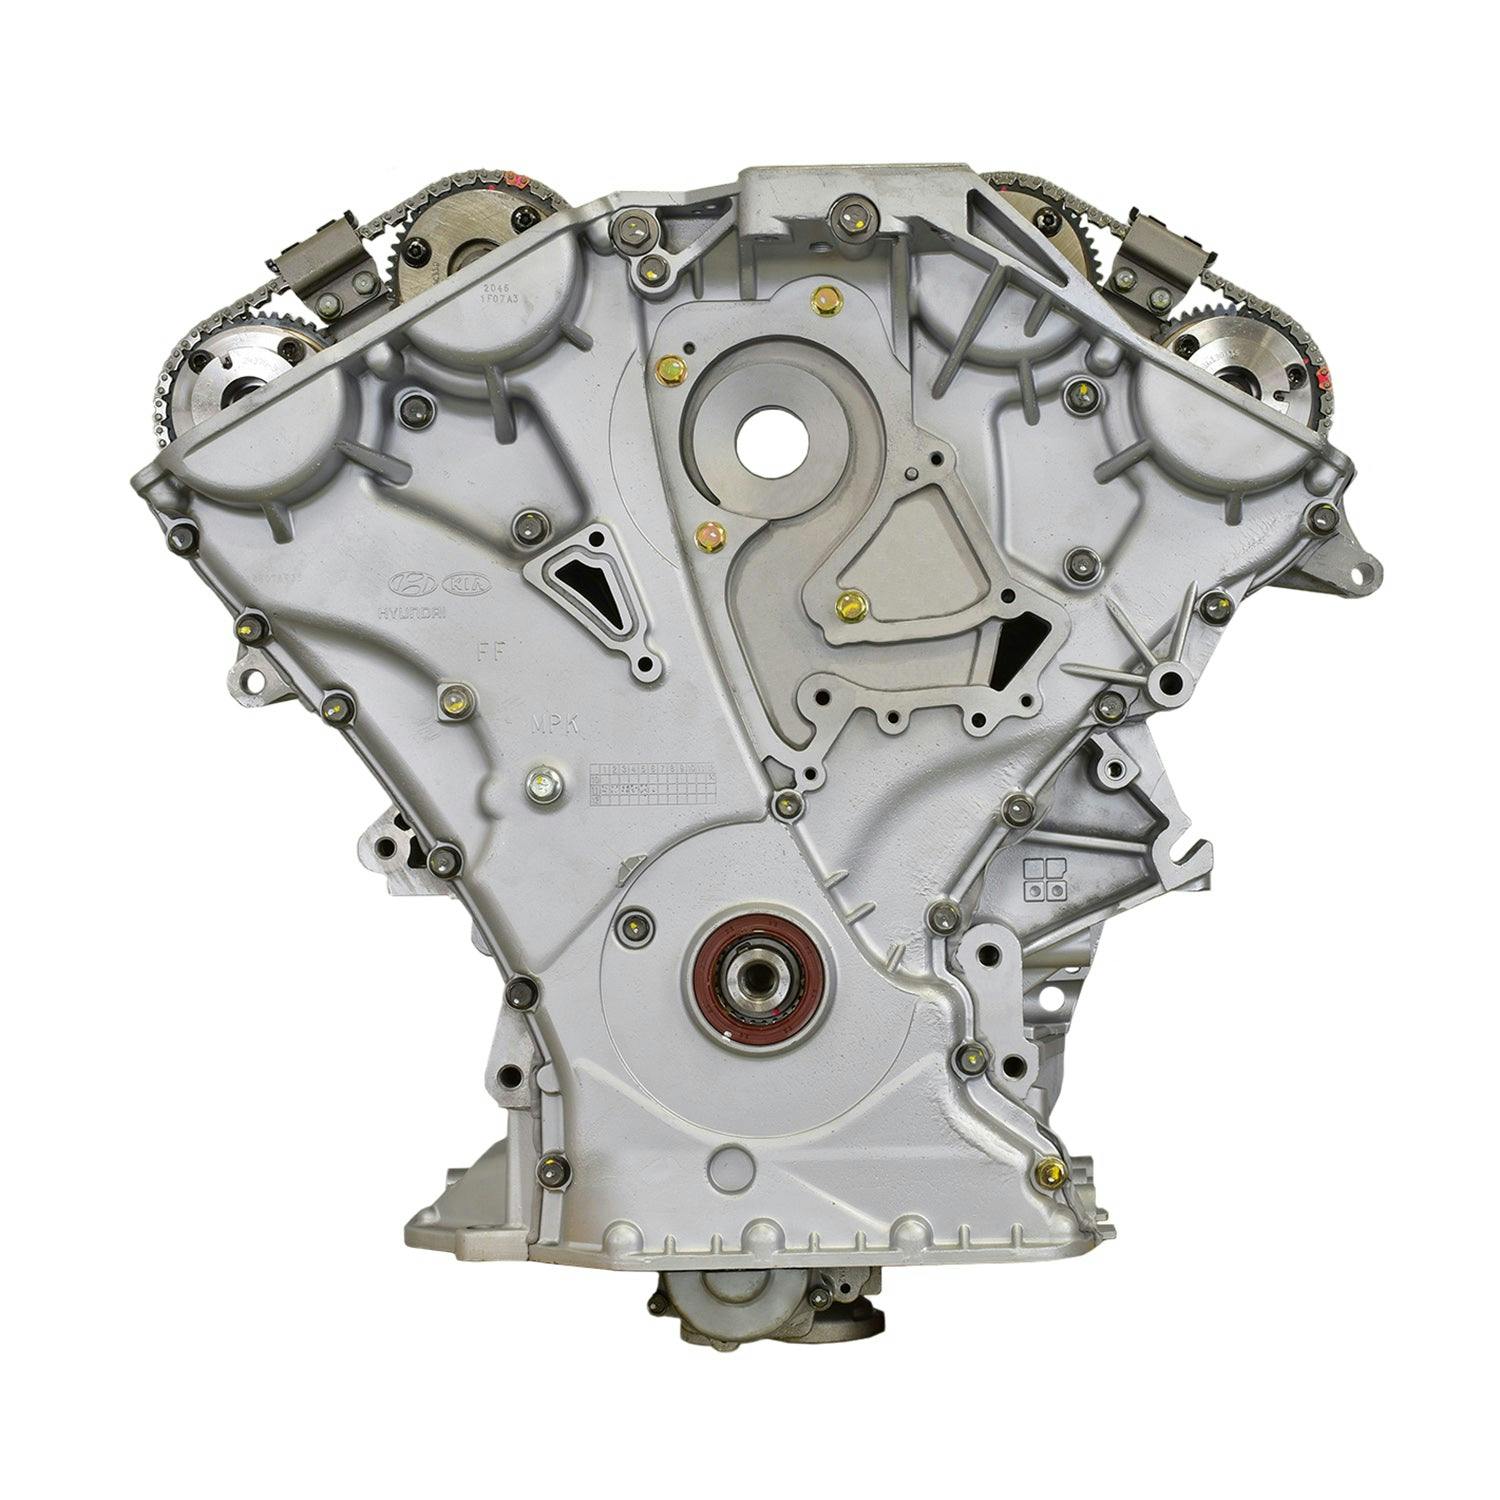 3.5L V6 Engine for 2010-2014 Hyundai Santa Fe/Kia Sedona, Sorento